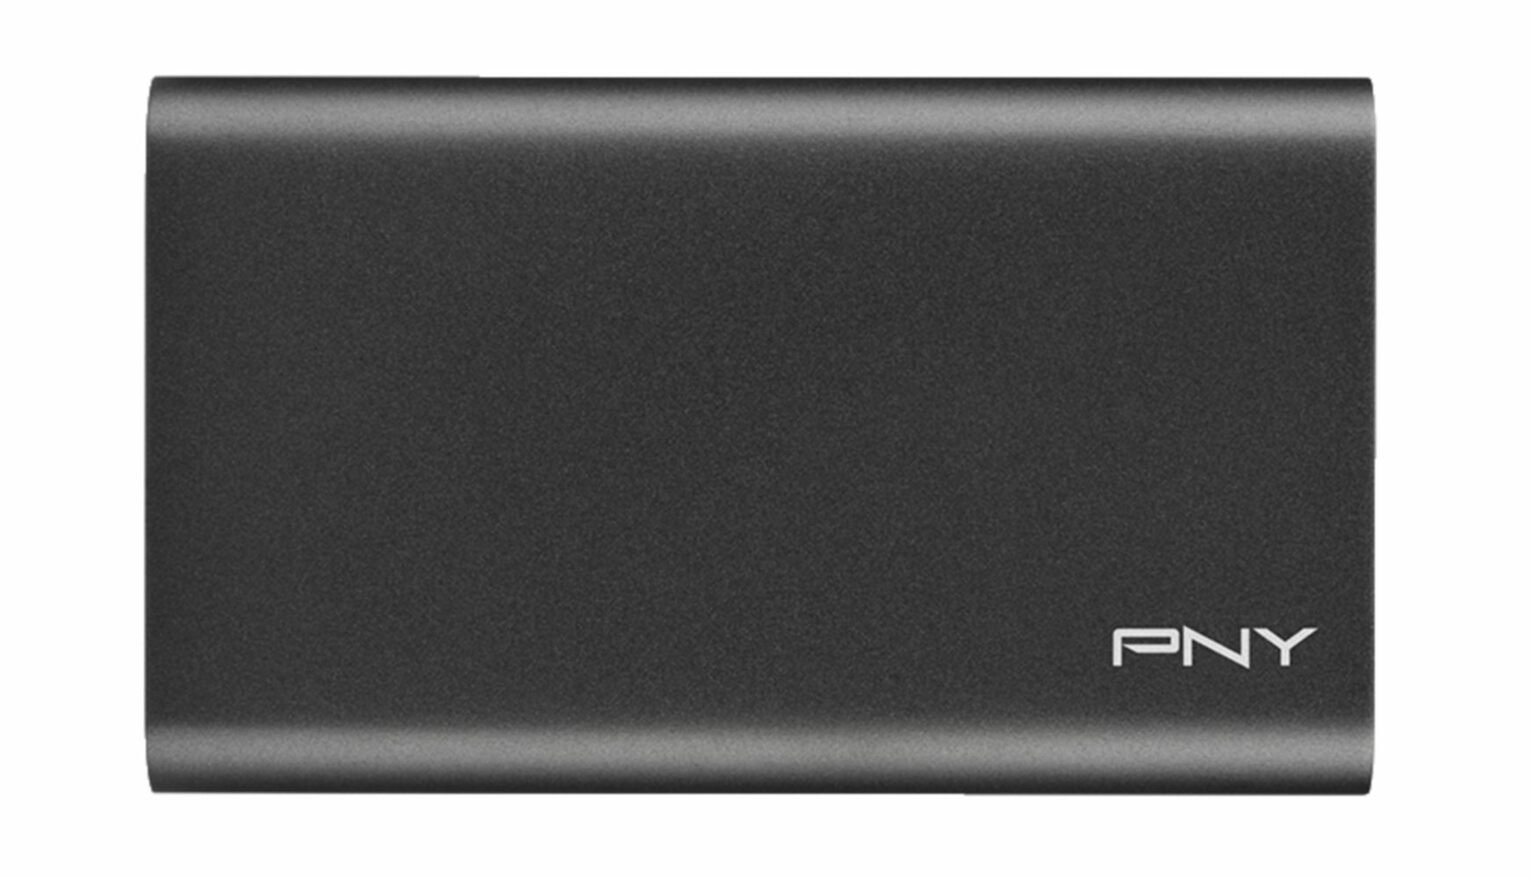 PNY Elite USB 3.1 Gen 1 480GB Portable SSD Hard Drive Review